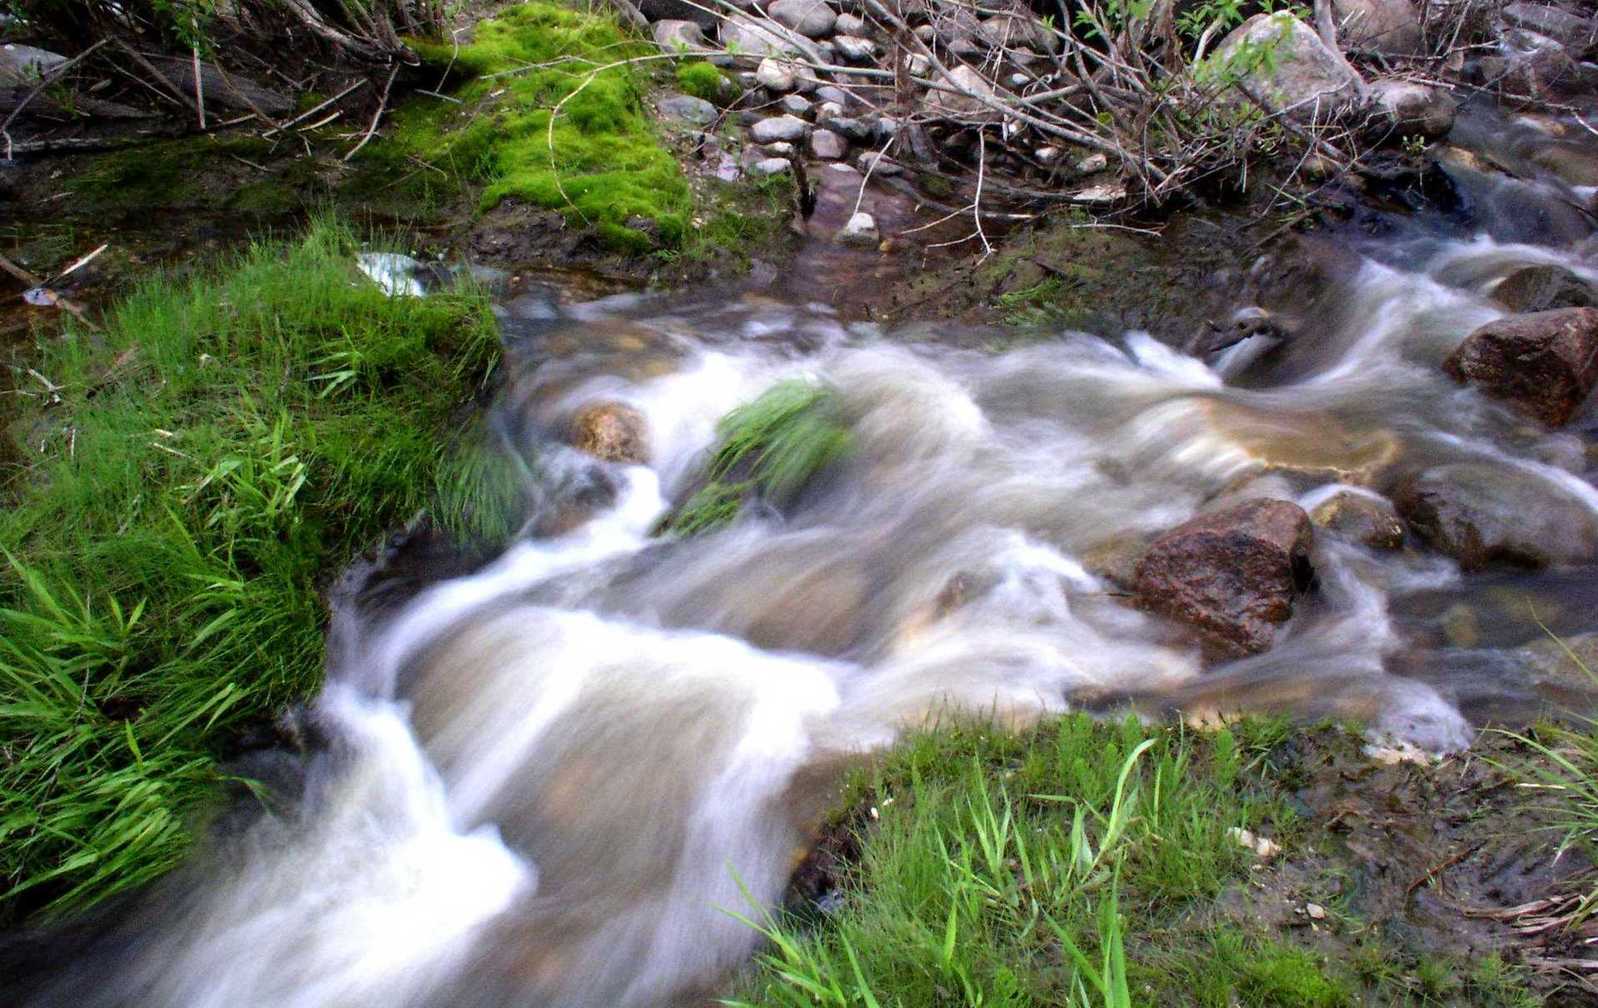 A stream runs over rocks.